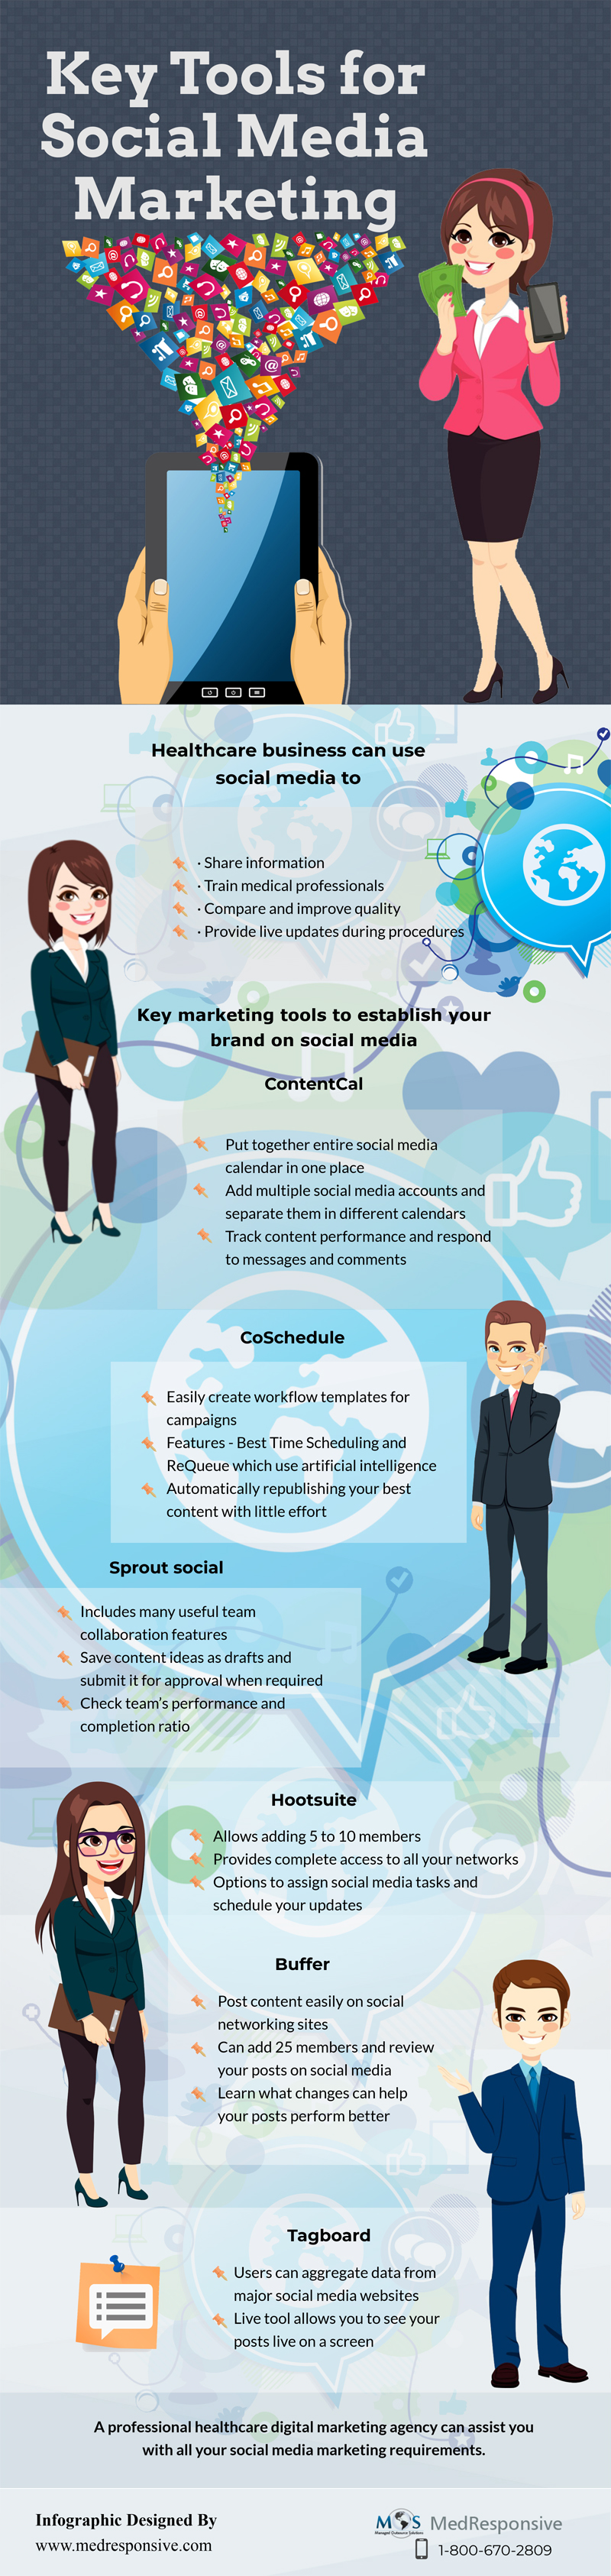 Key Tools for Social Media Marketing 